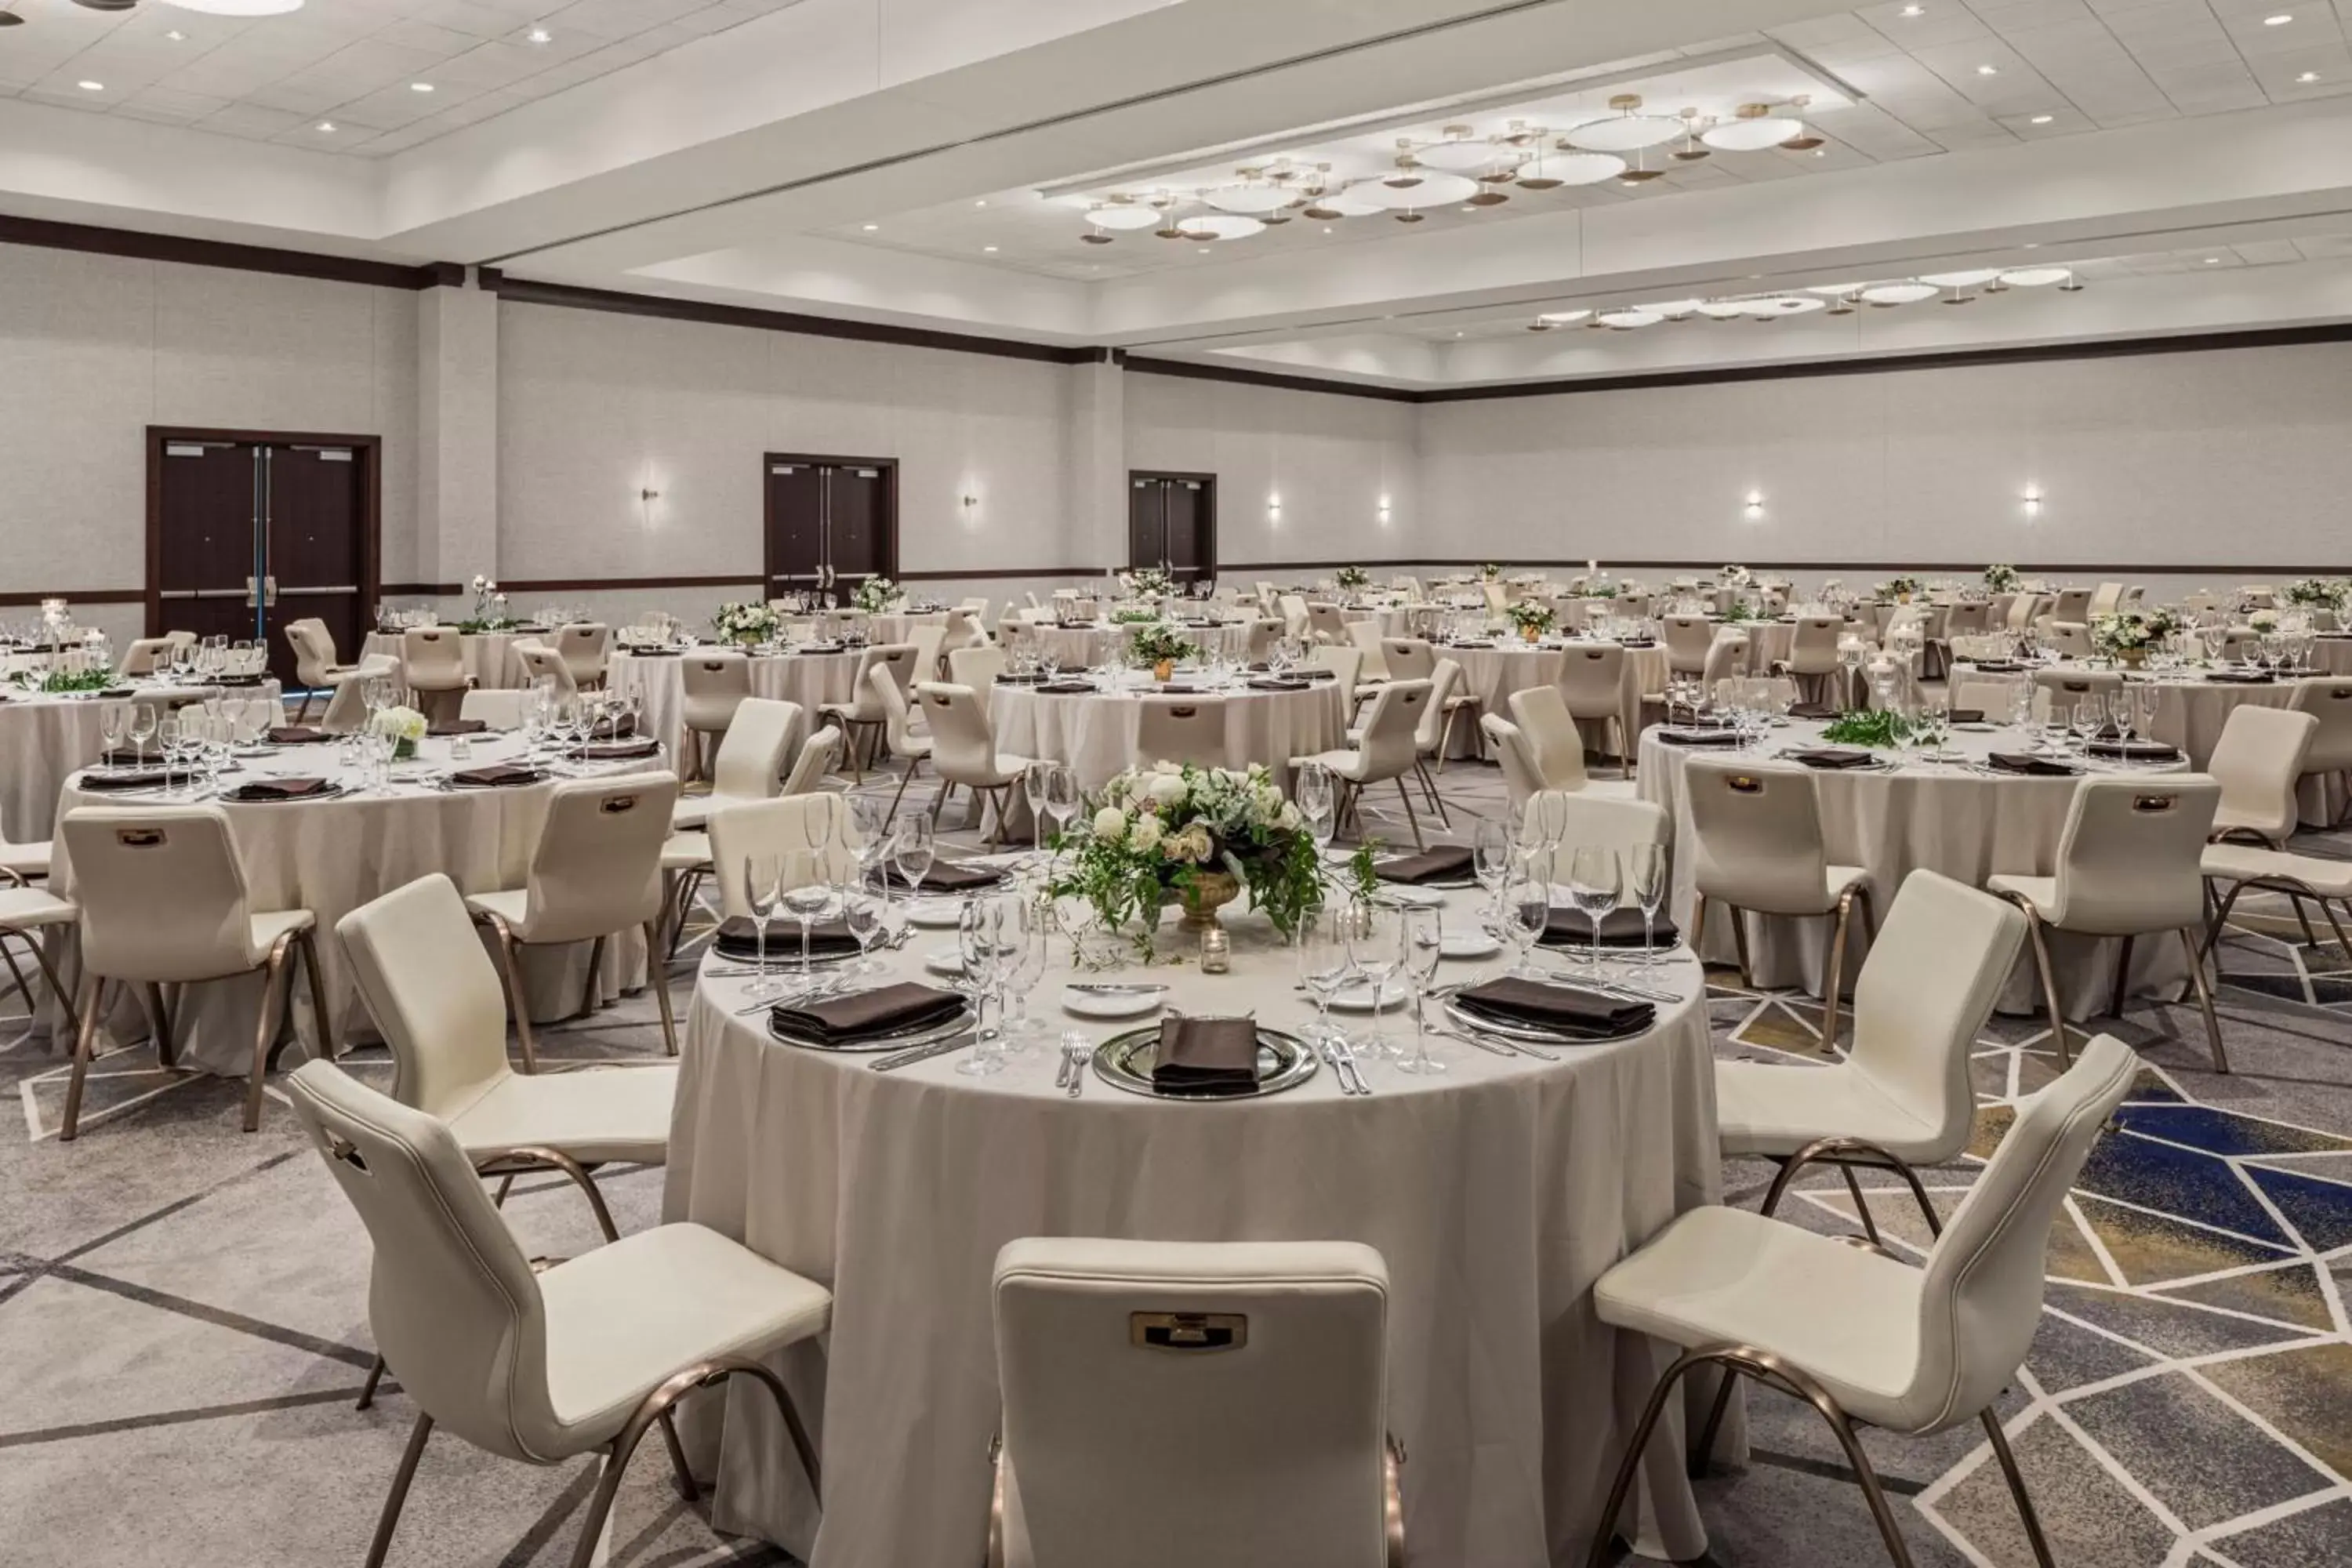 Banquet/Function facilities, Banquet Facilities in The Westin Edina Galleria